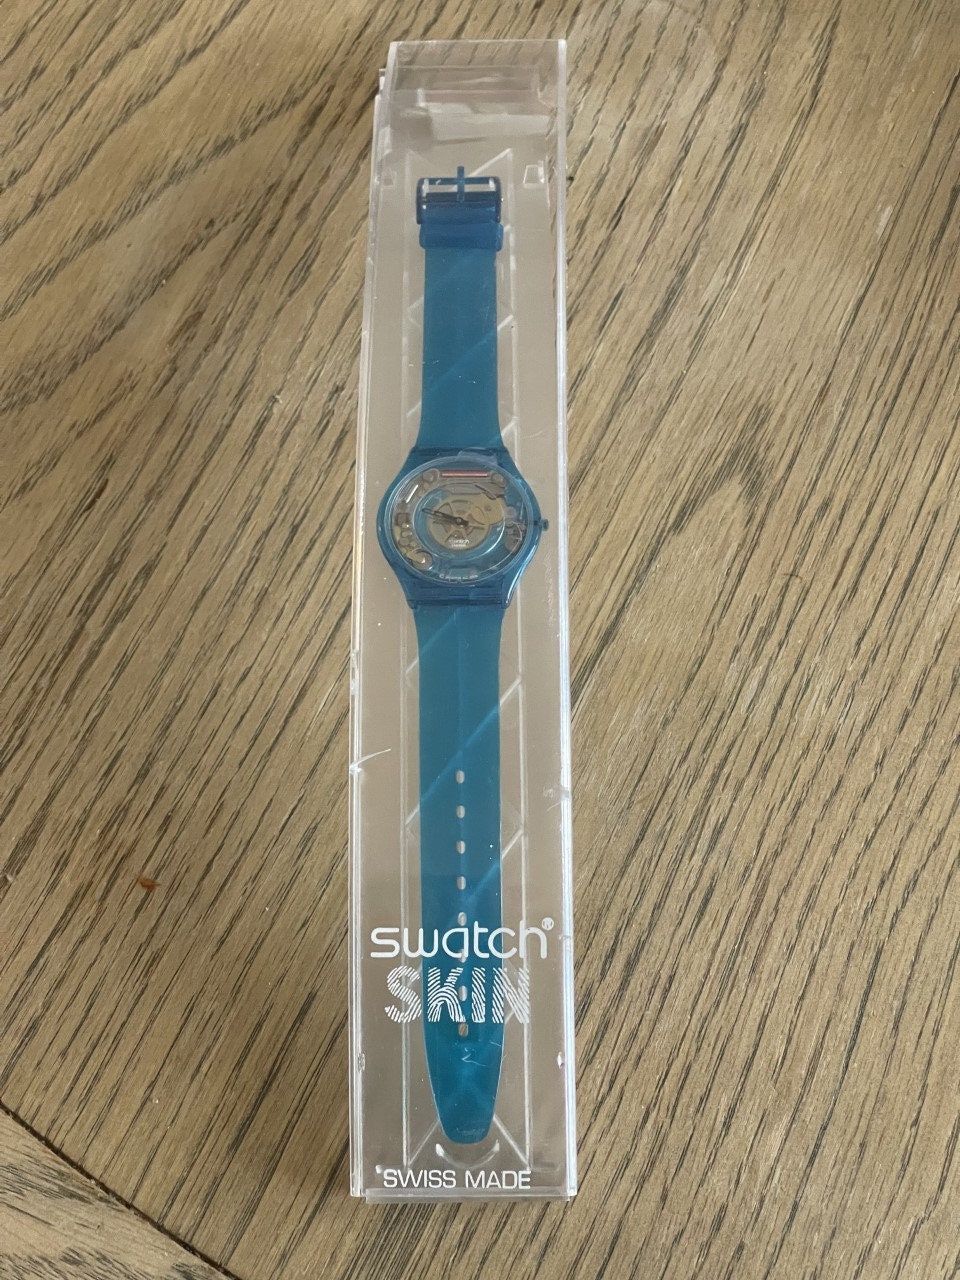 Swatch Skin Classic Blaumann Dark Blue Watch Sfn123